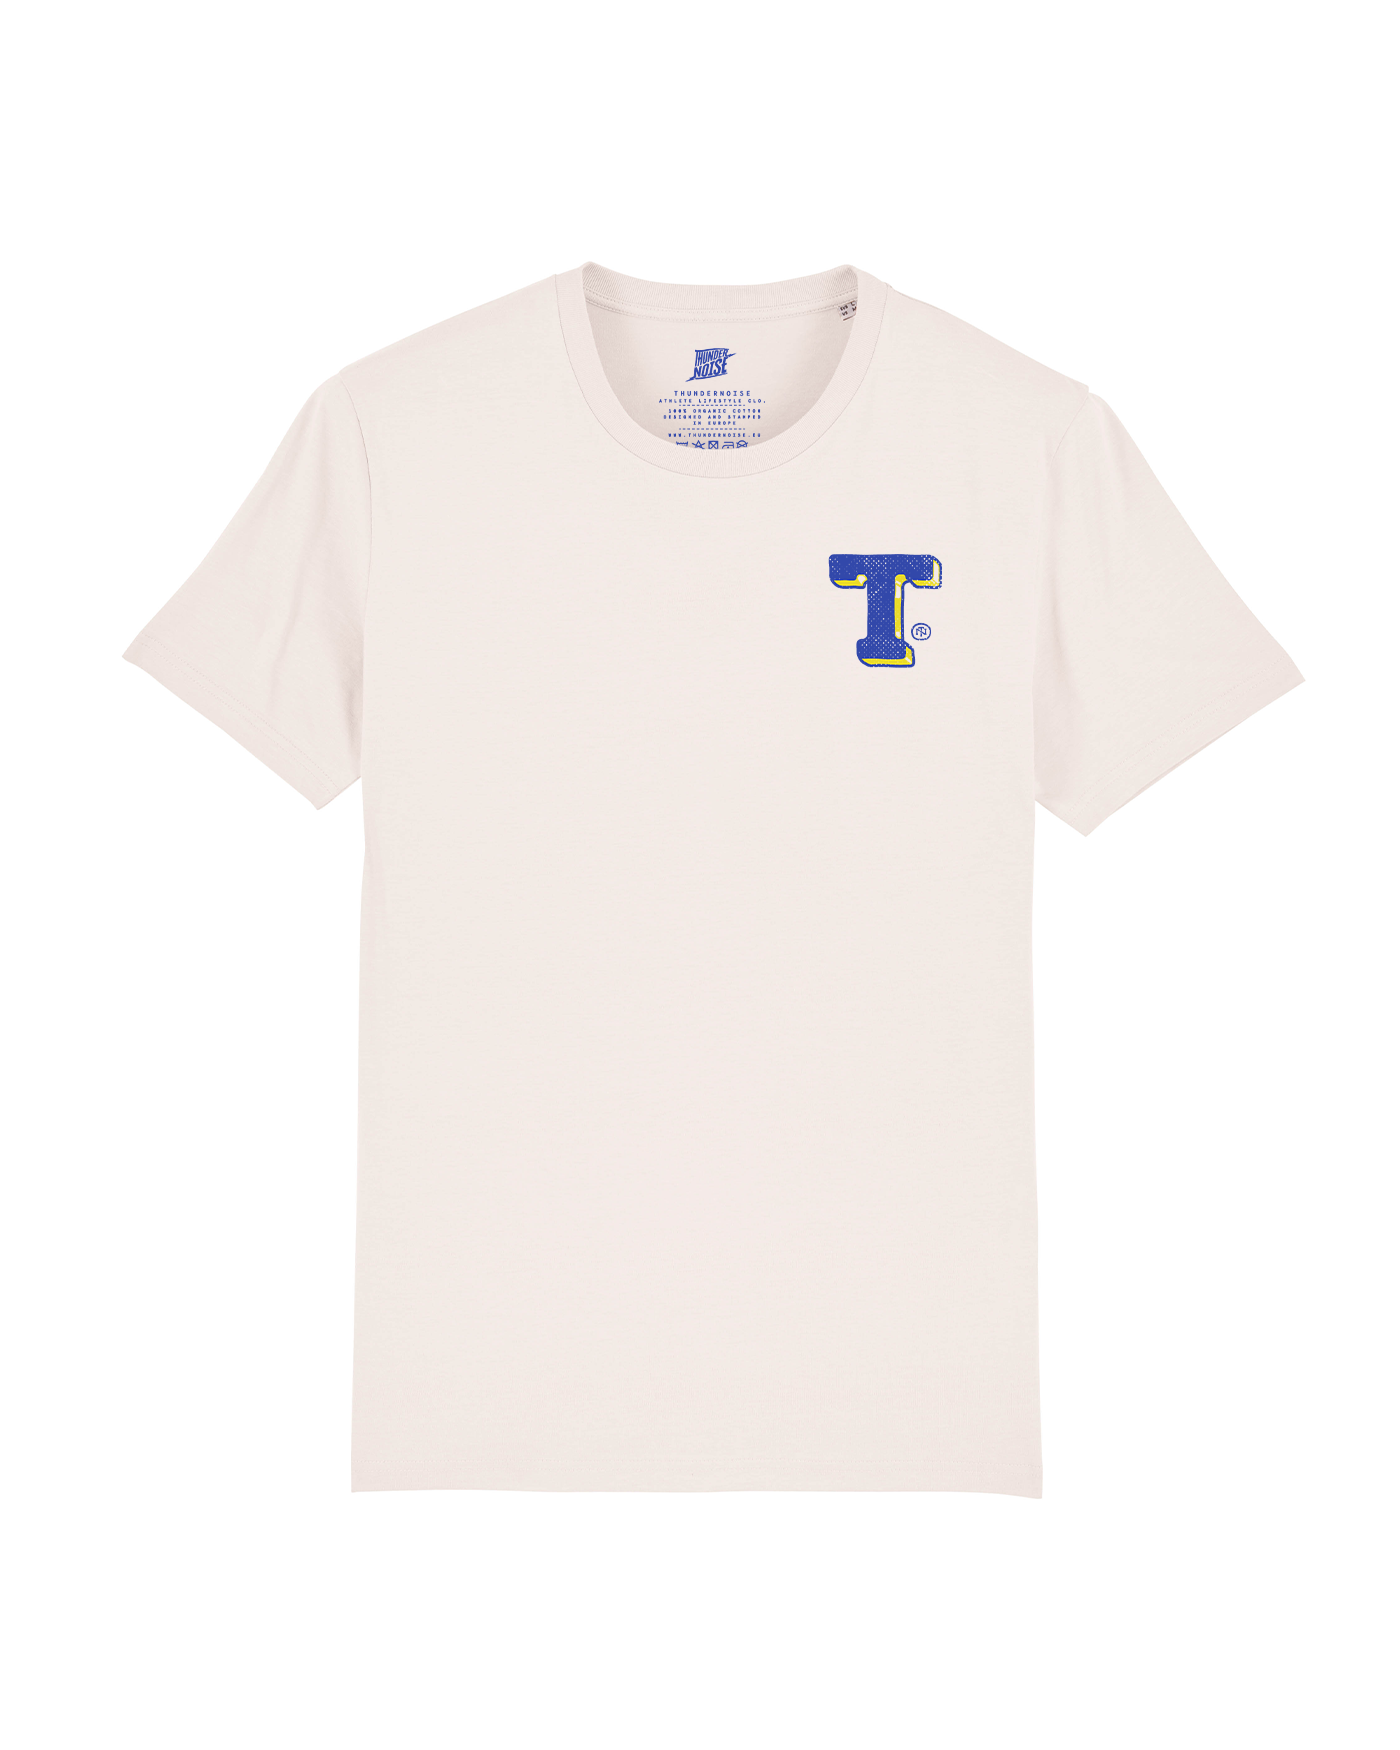 Unleash The Thunder T-Shirt - Vintage White